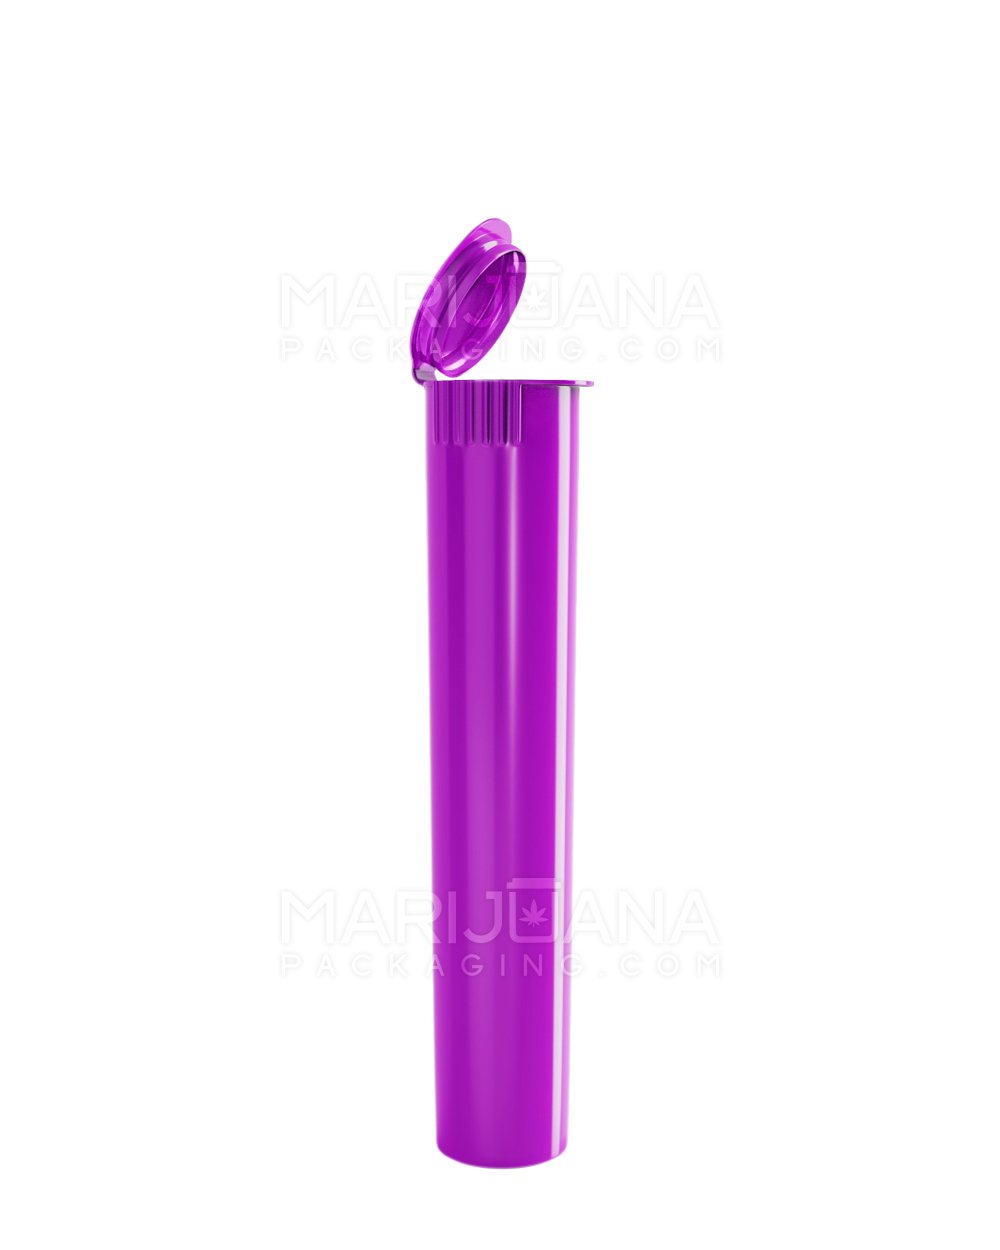 Child Resistant | Pop Top Opaque Plastic Pre-Roll Tubes | 95mm - Purple - 1000 Count - 1